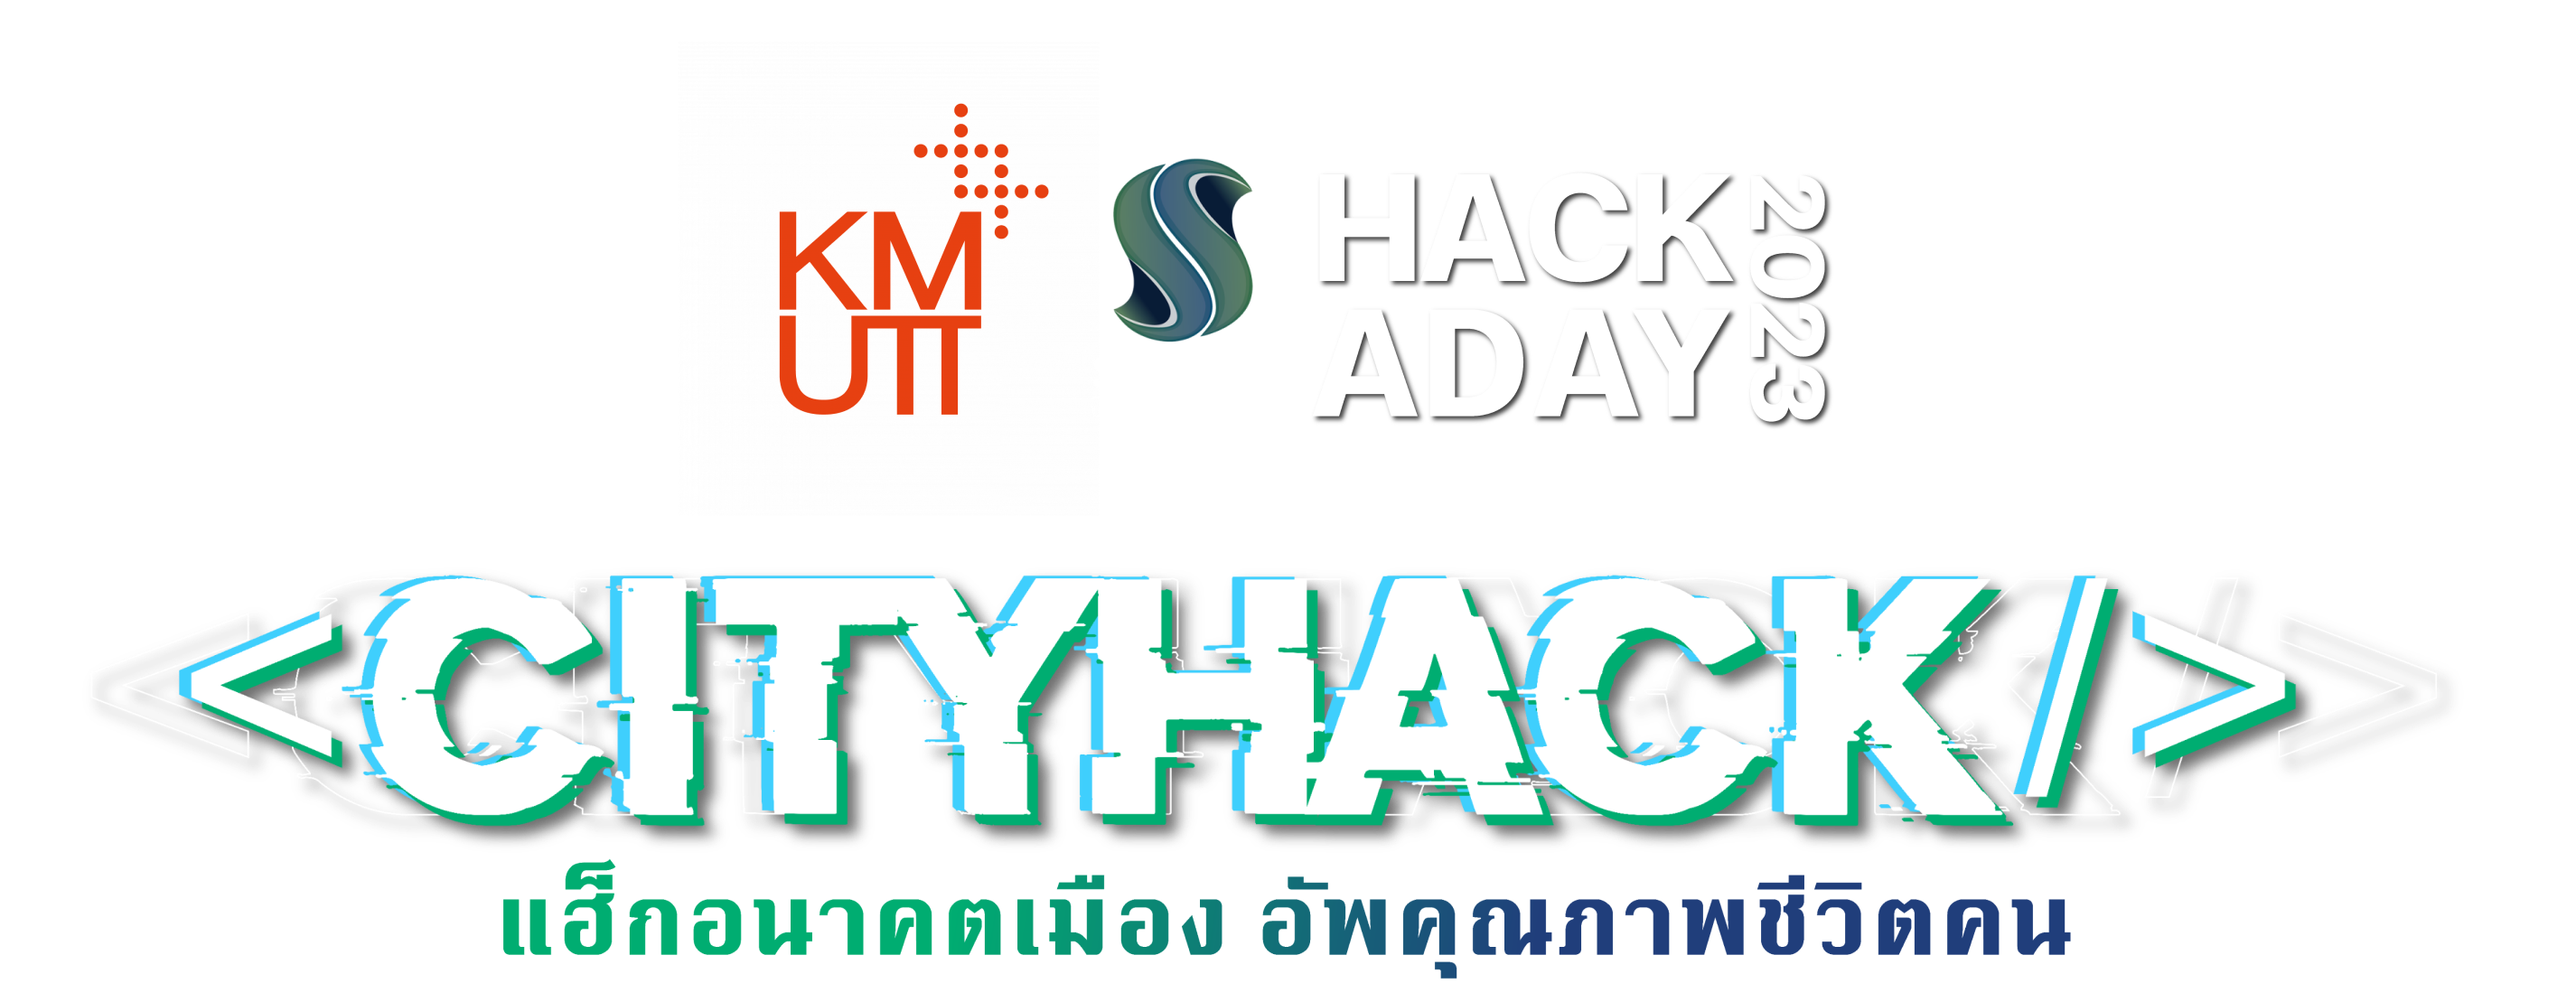 cityhack logo